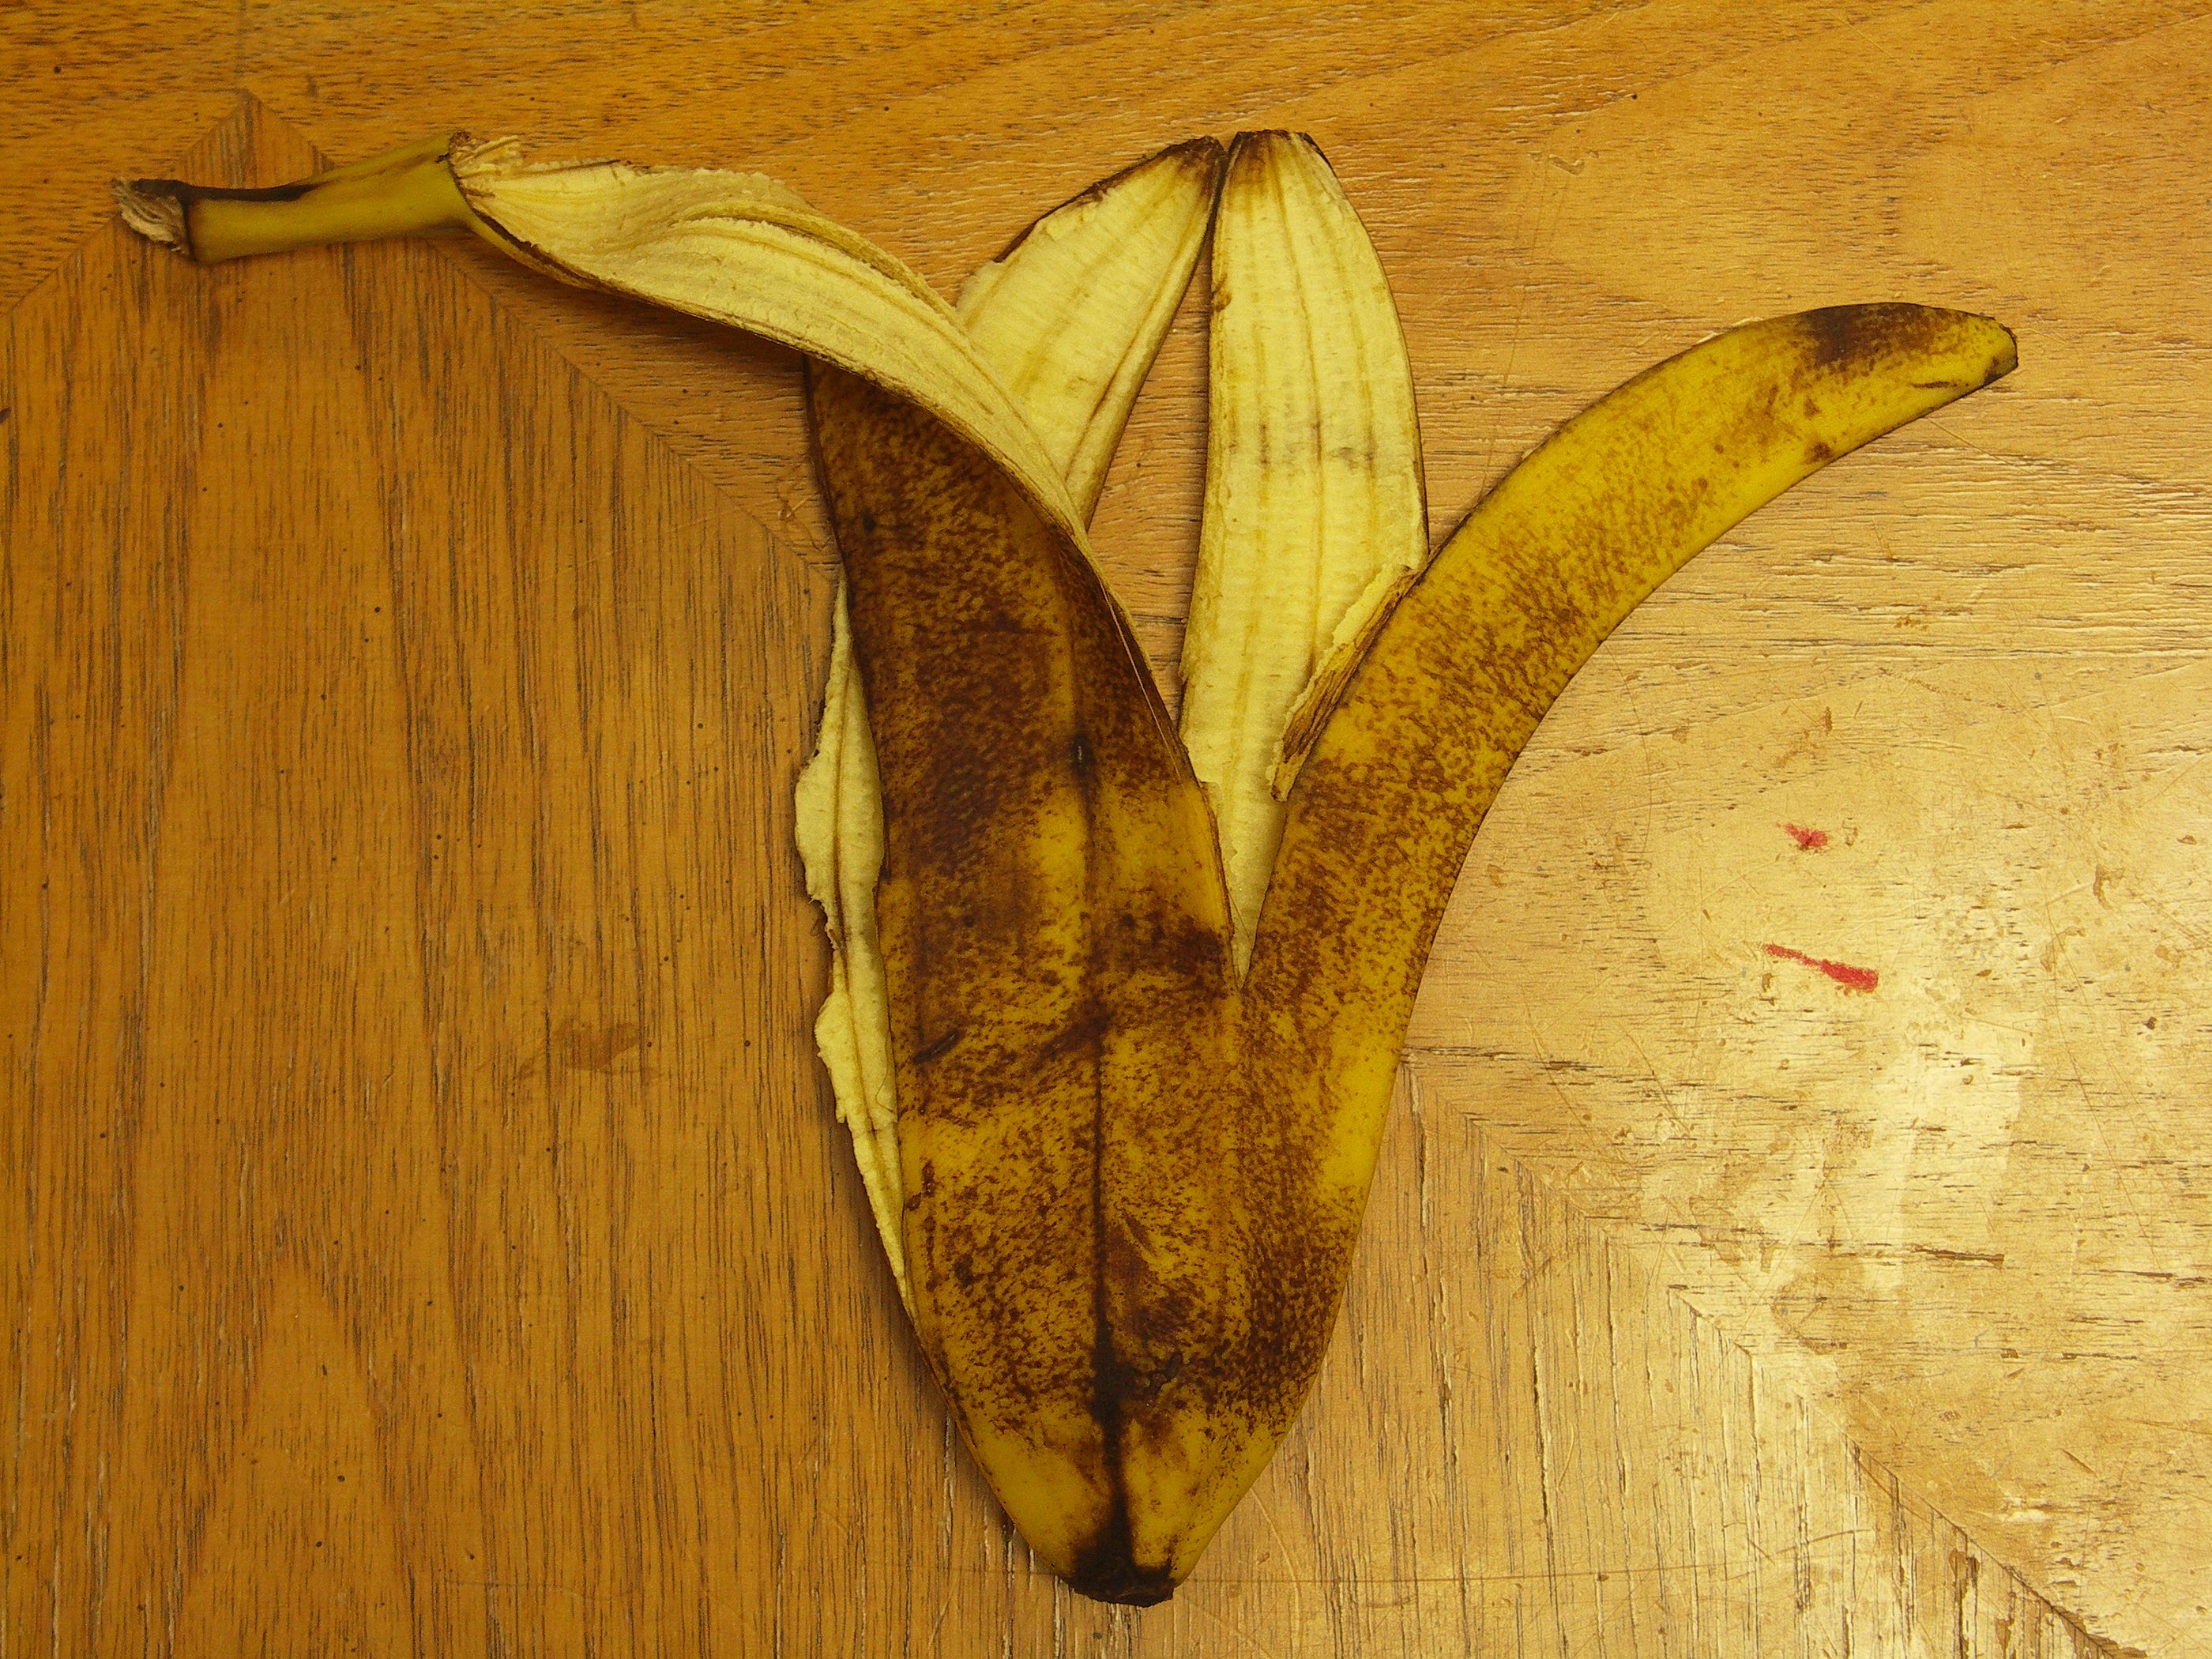 Bananadine. Smoke a banana, get “high” | by Zach | Medium